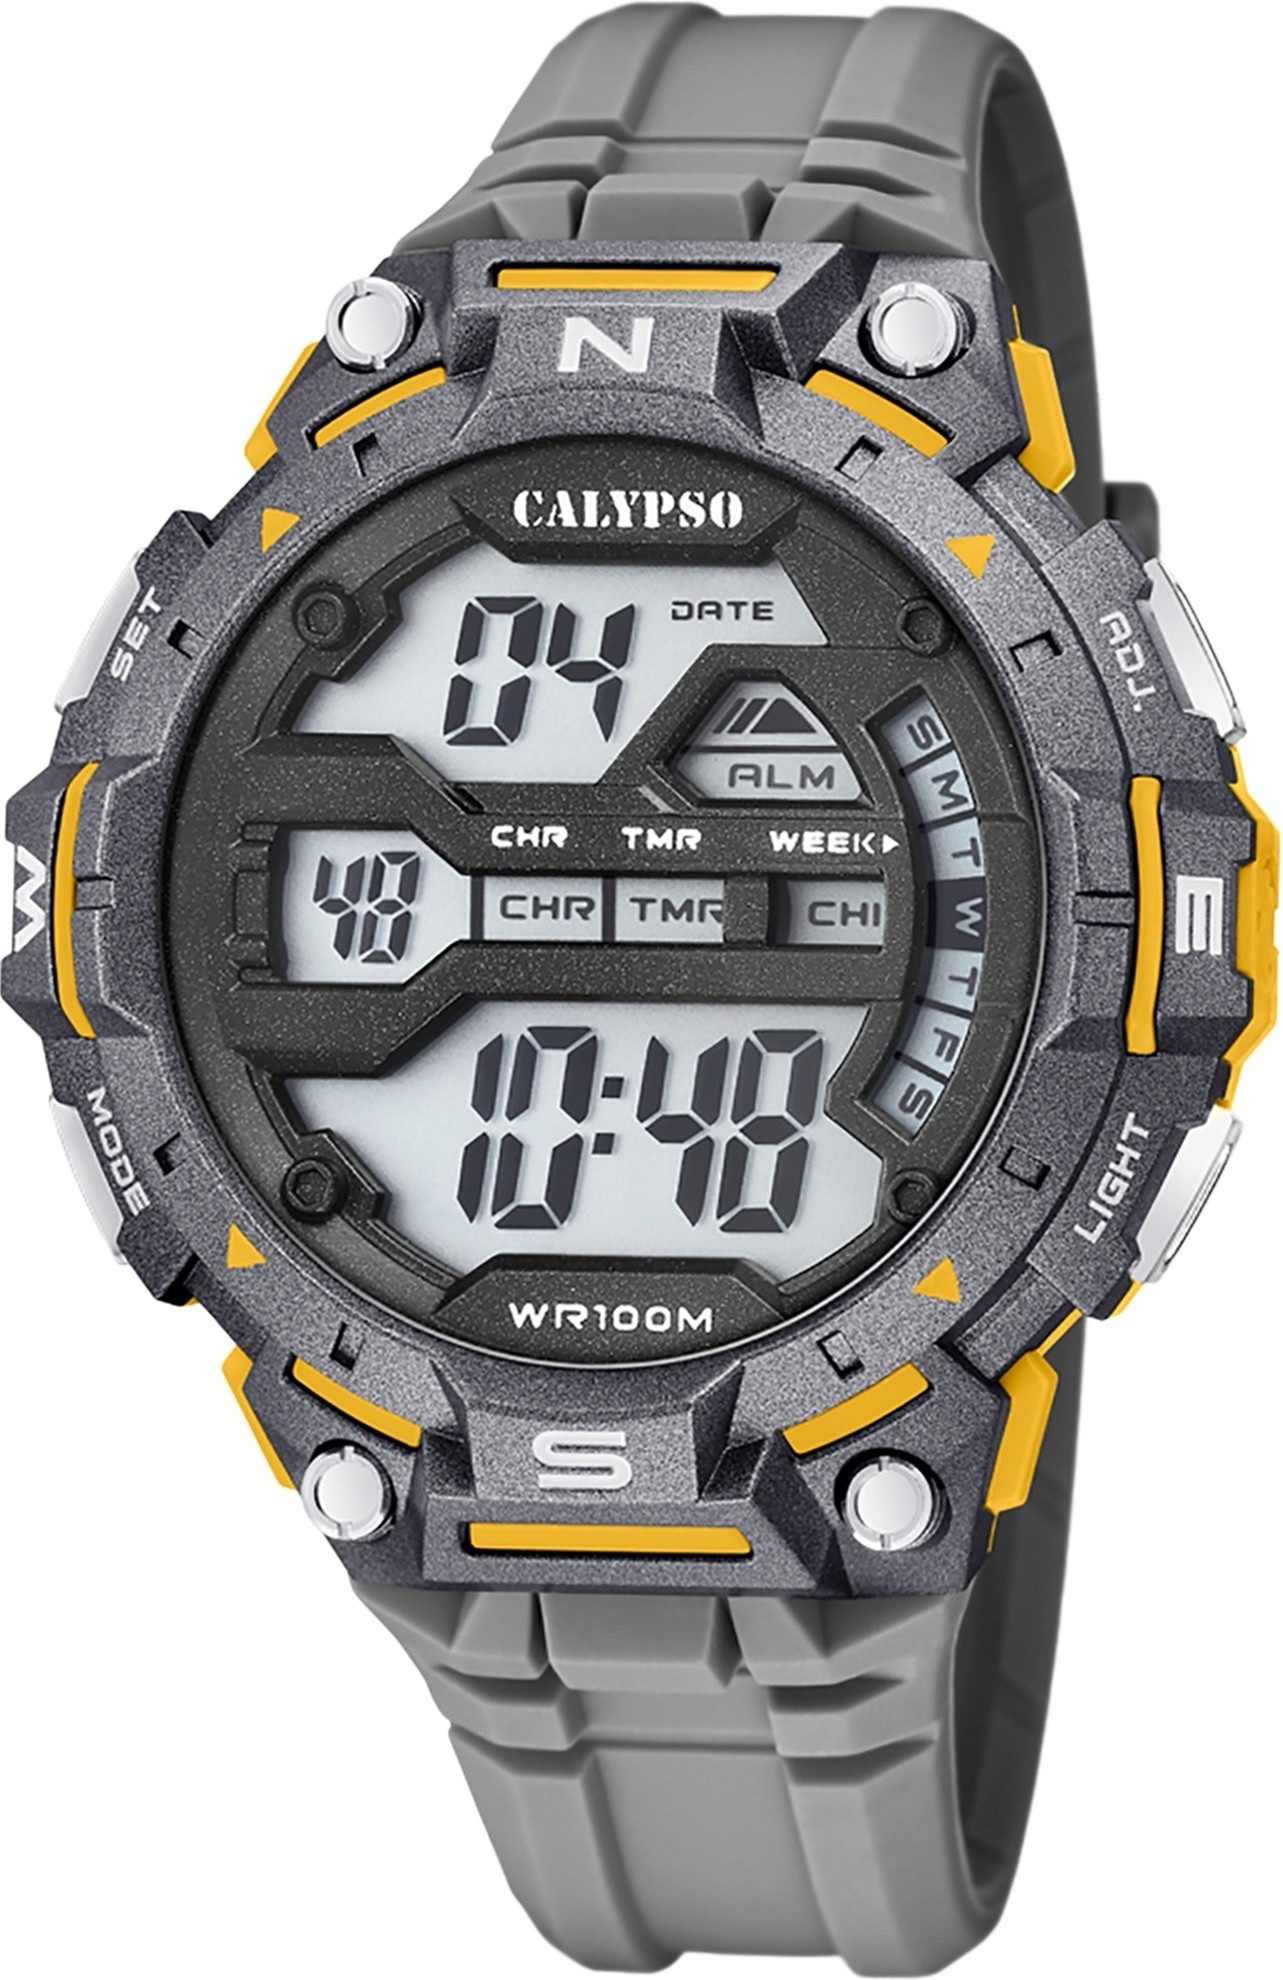 CALYPSO WATCHES Digitaluhr Calypso Herrenuhr Kunststoff grau Calypso, (Digitaluhr), Herrenuhr rund, extra groß (ca. 51mm) Kunststoffarmband, Sport-Style